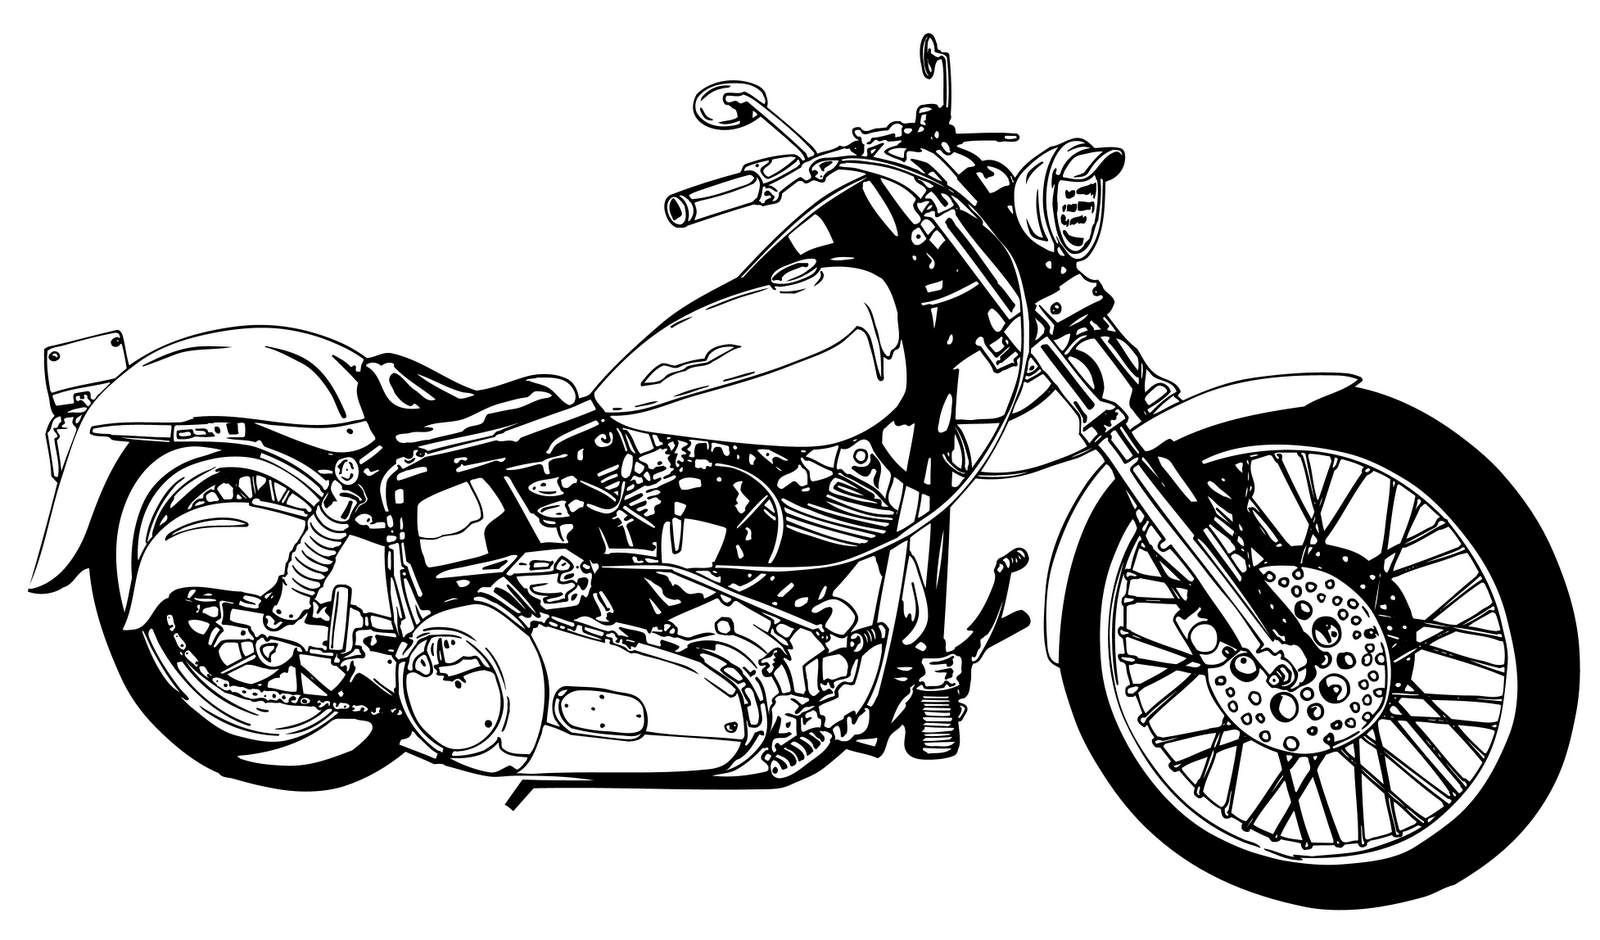 Motorcycle harleydavidson chopper.